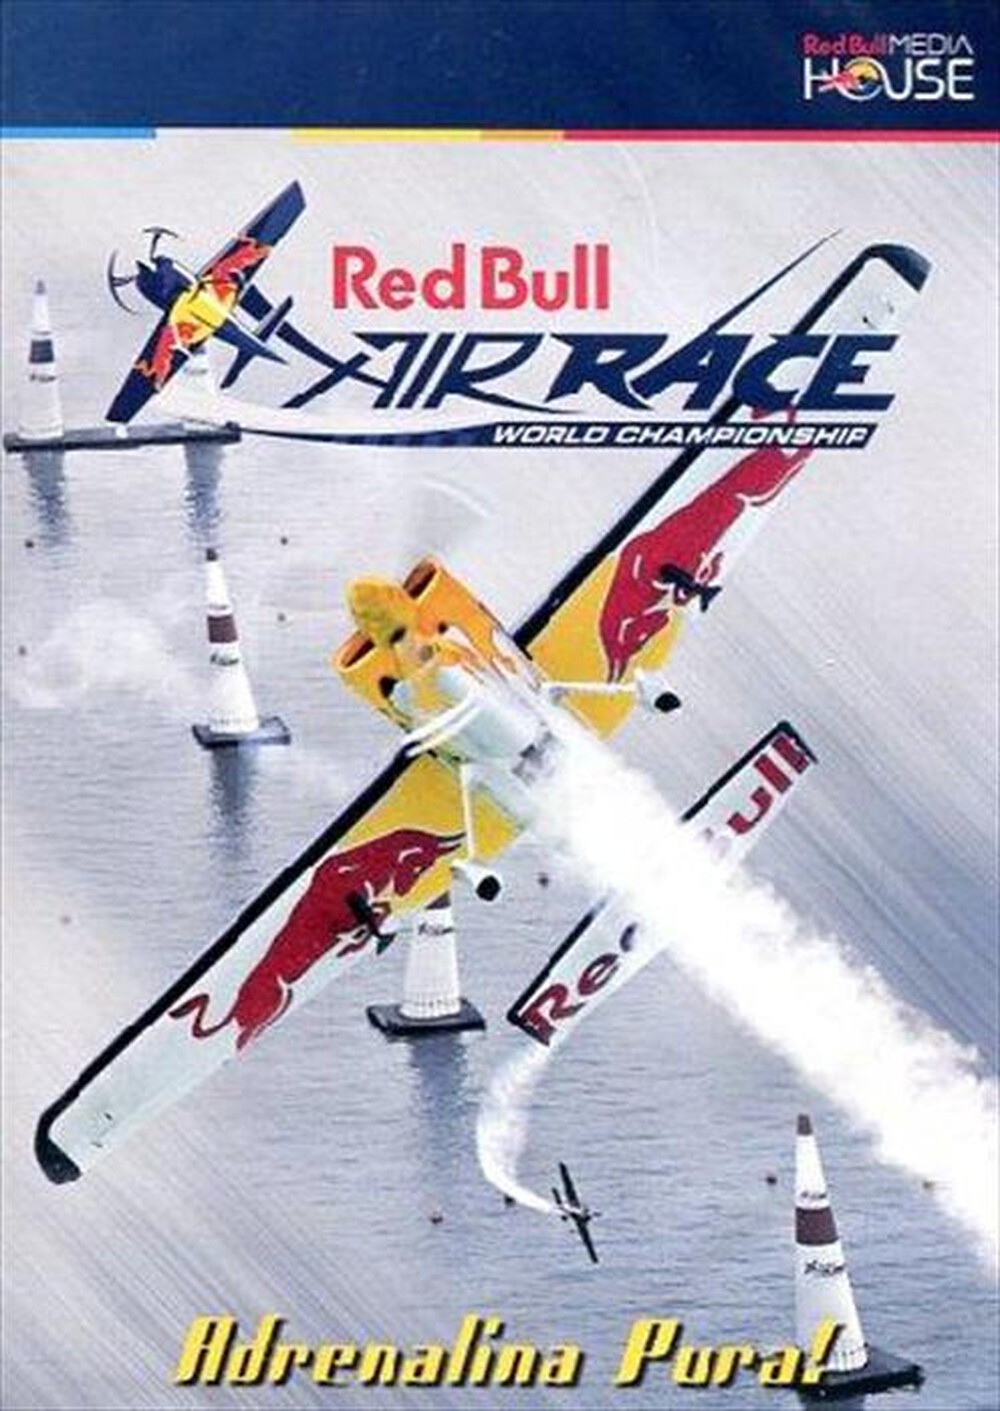 "RED BULL - Air Race"